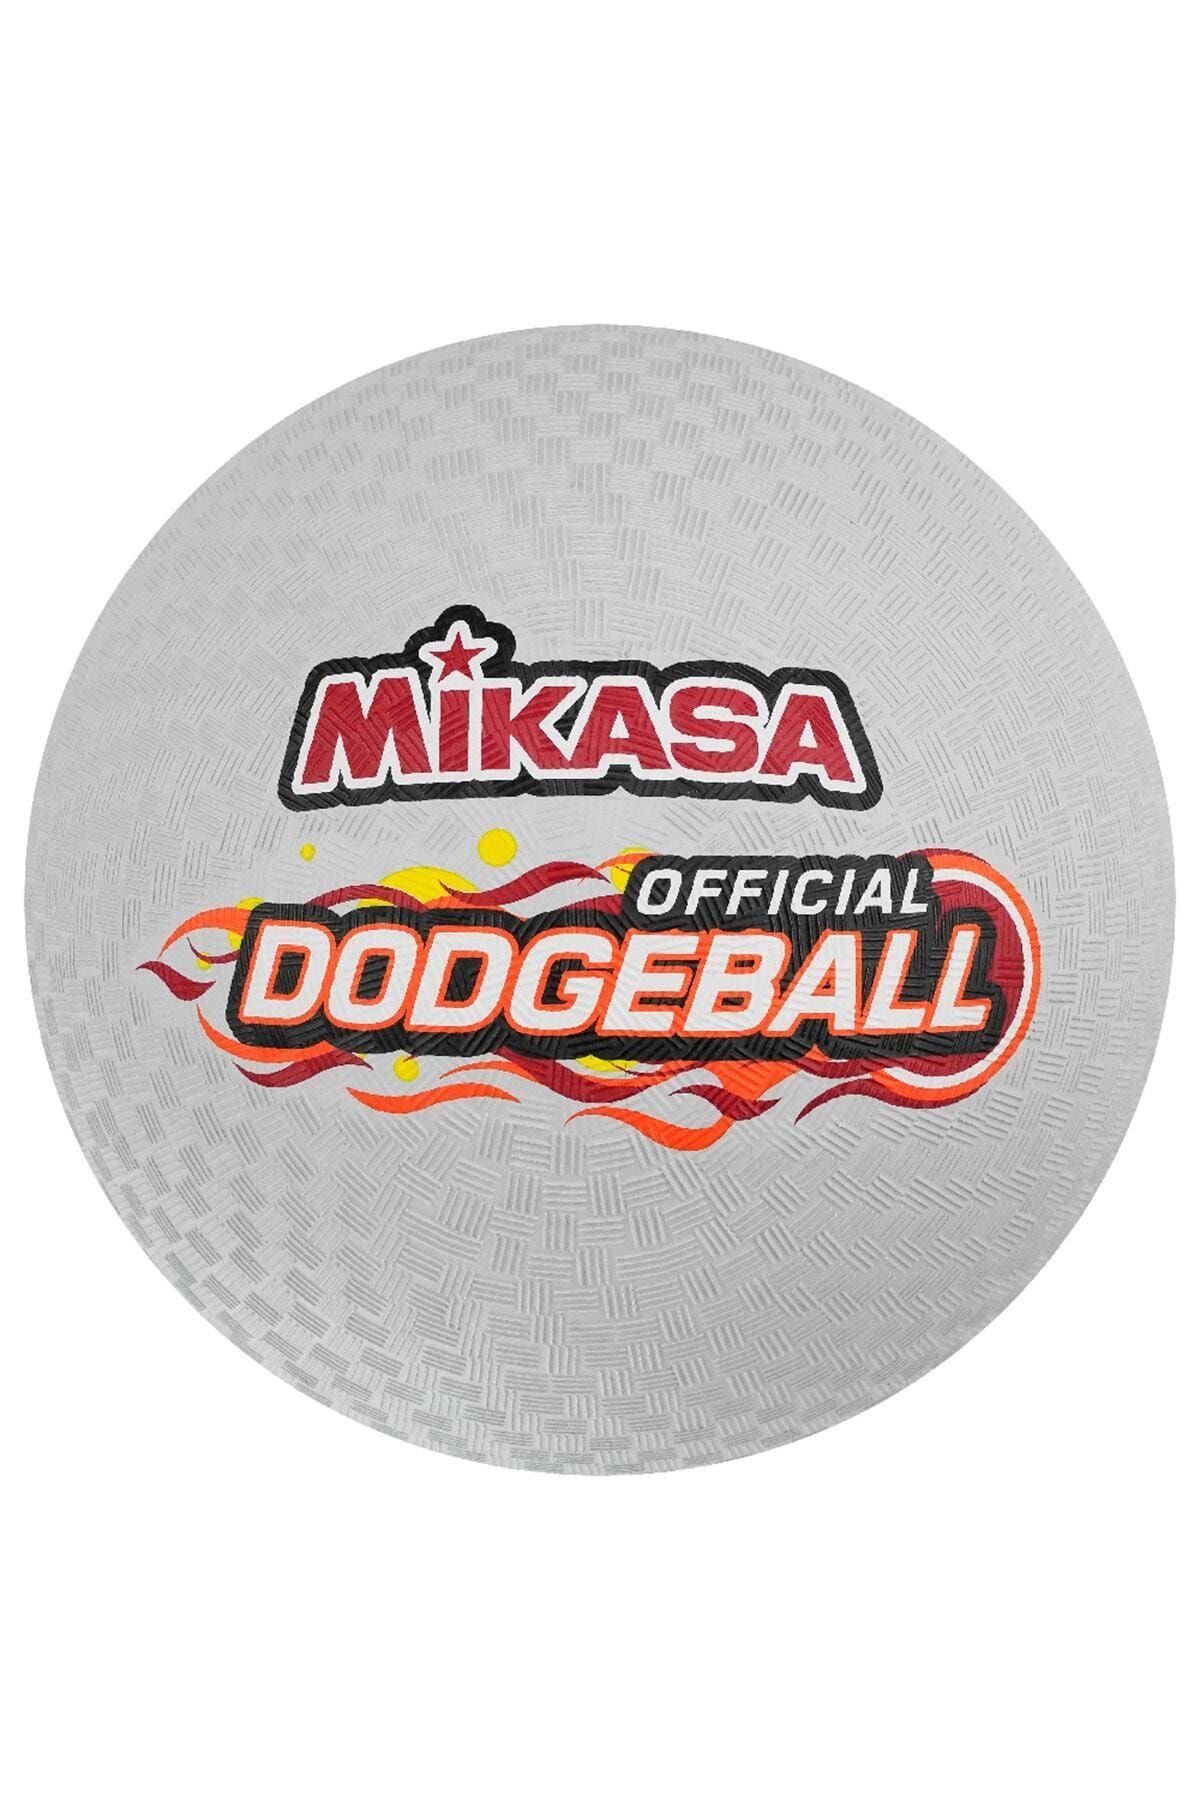 MIKASA Dgb850 Dodgeball Yakan Top Oyun Topu